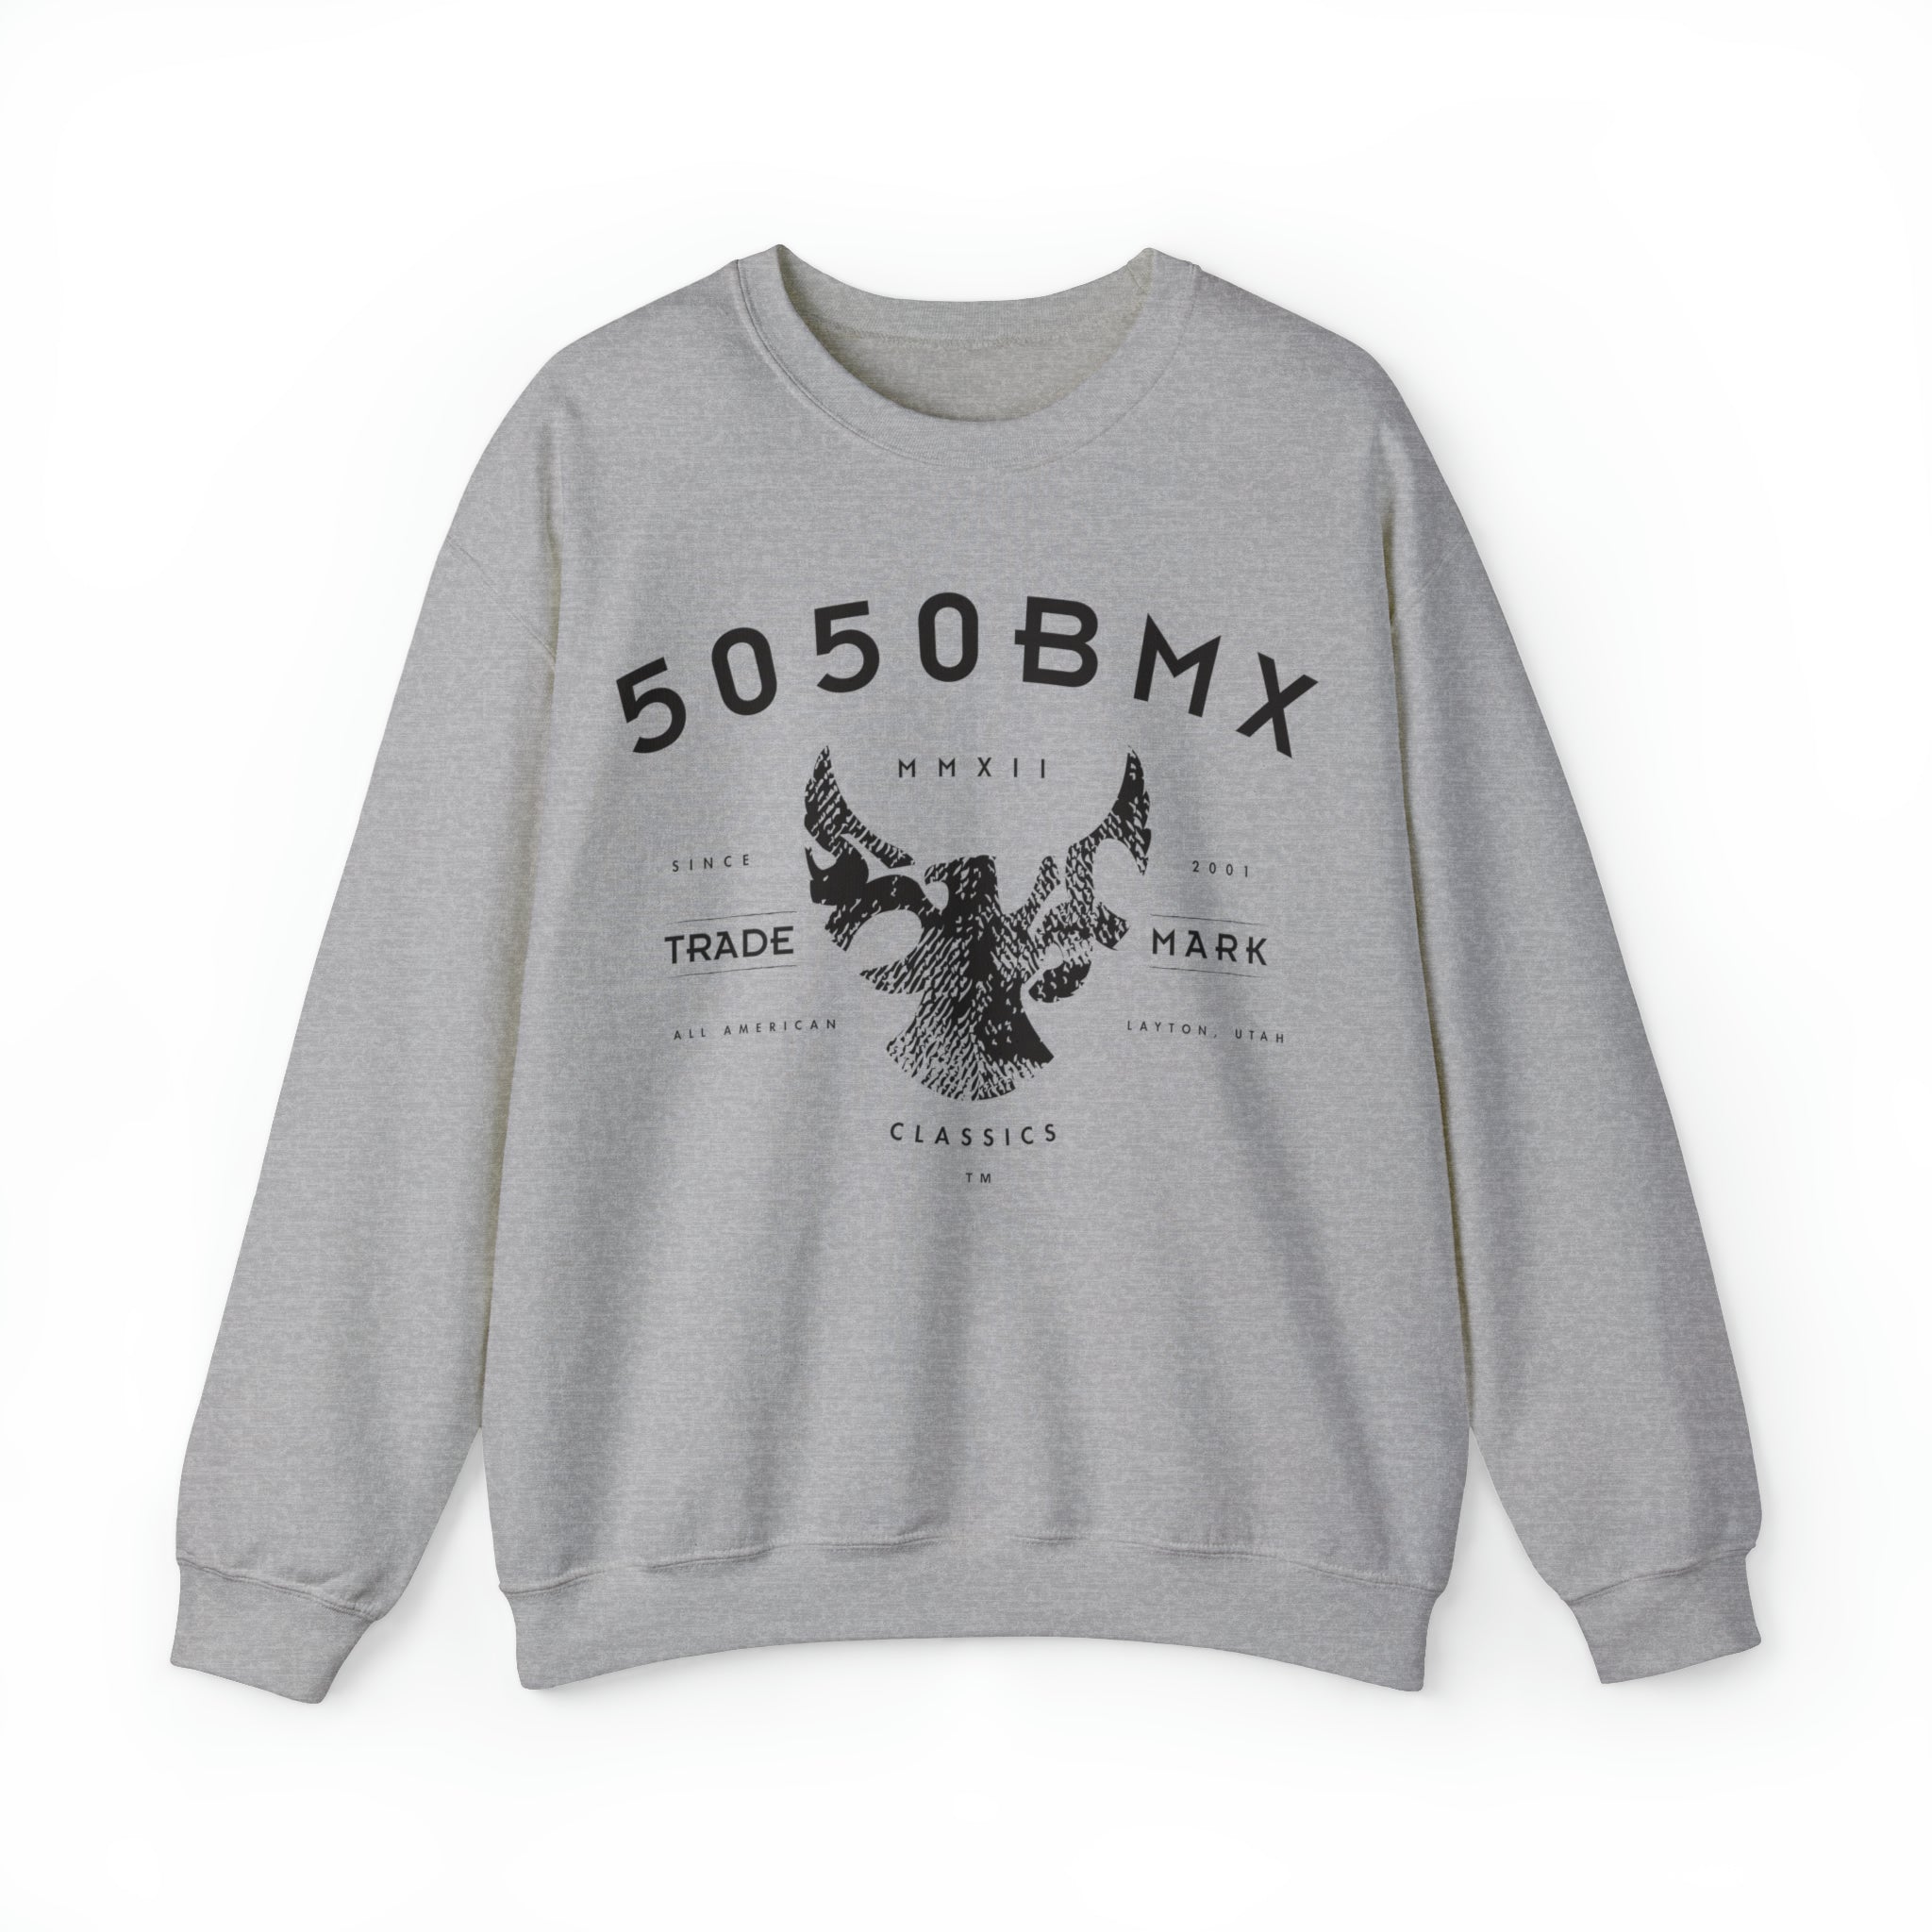 5050bmx Trademark Crewneck Sweatshirt